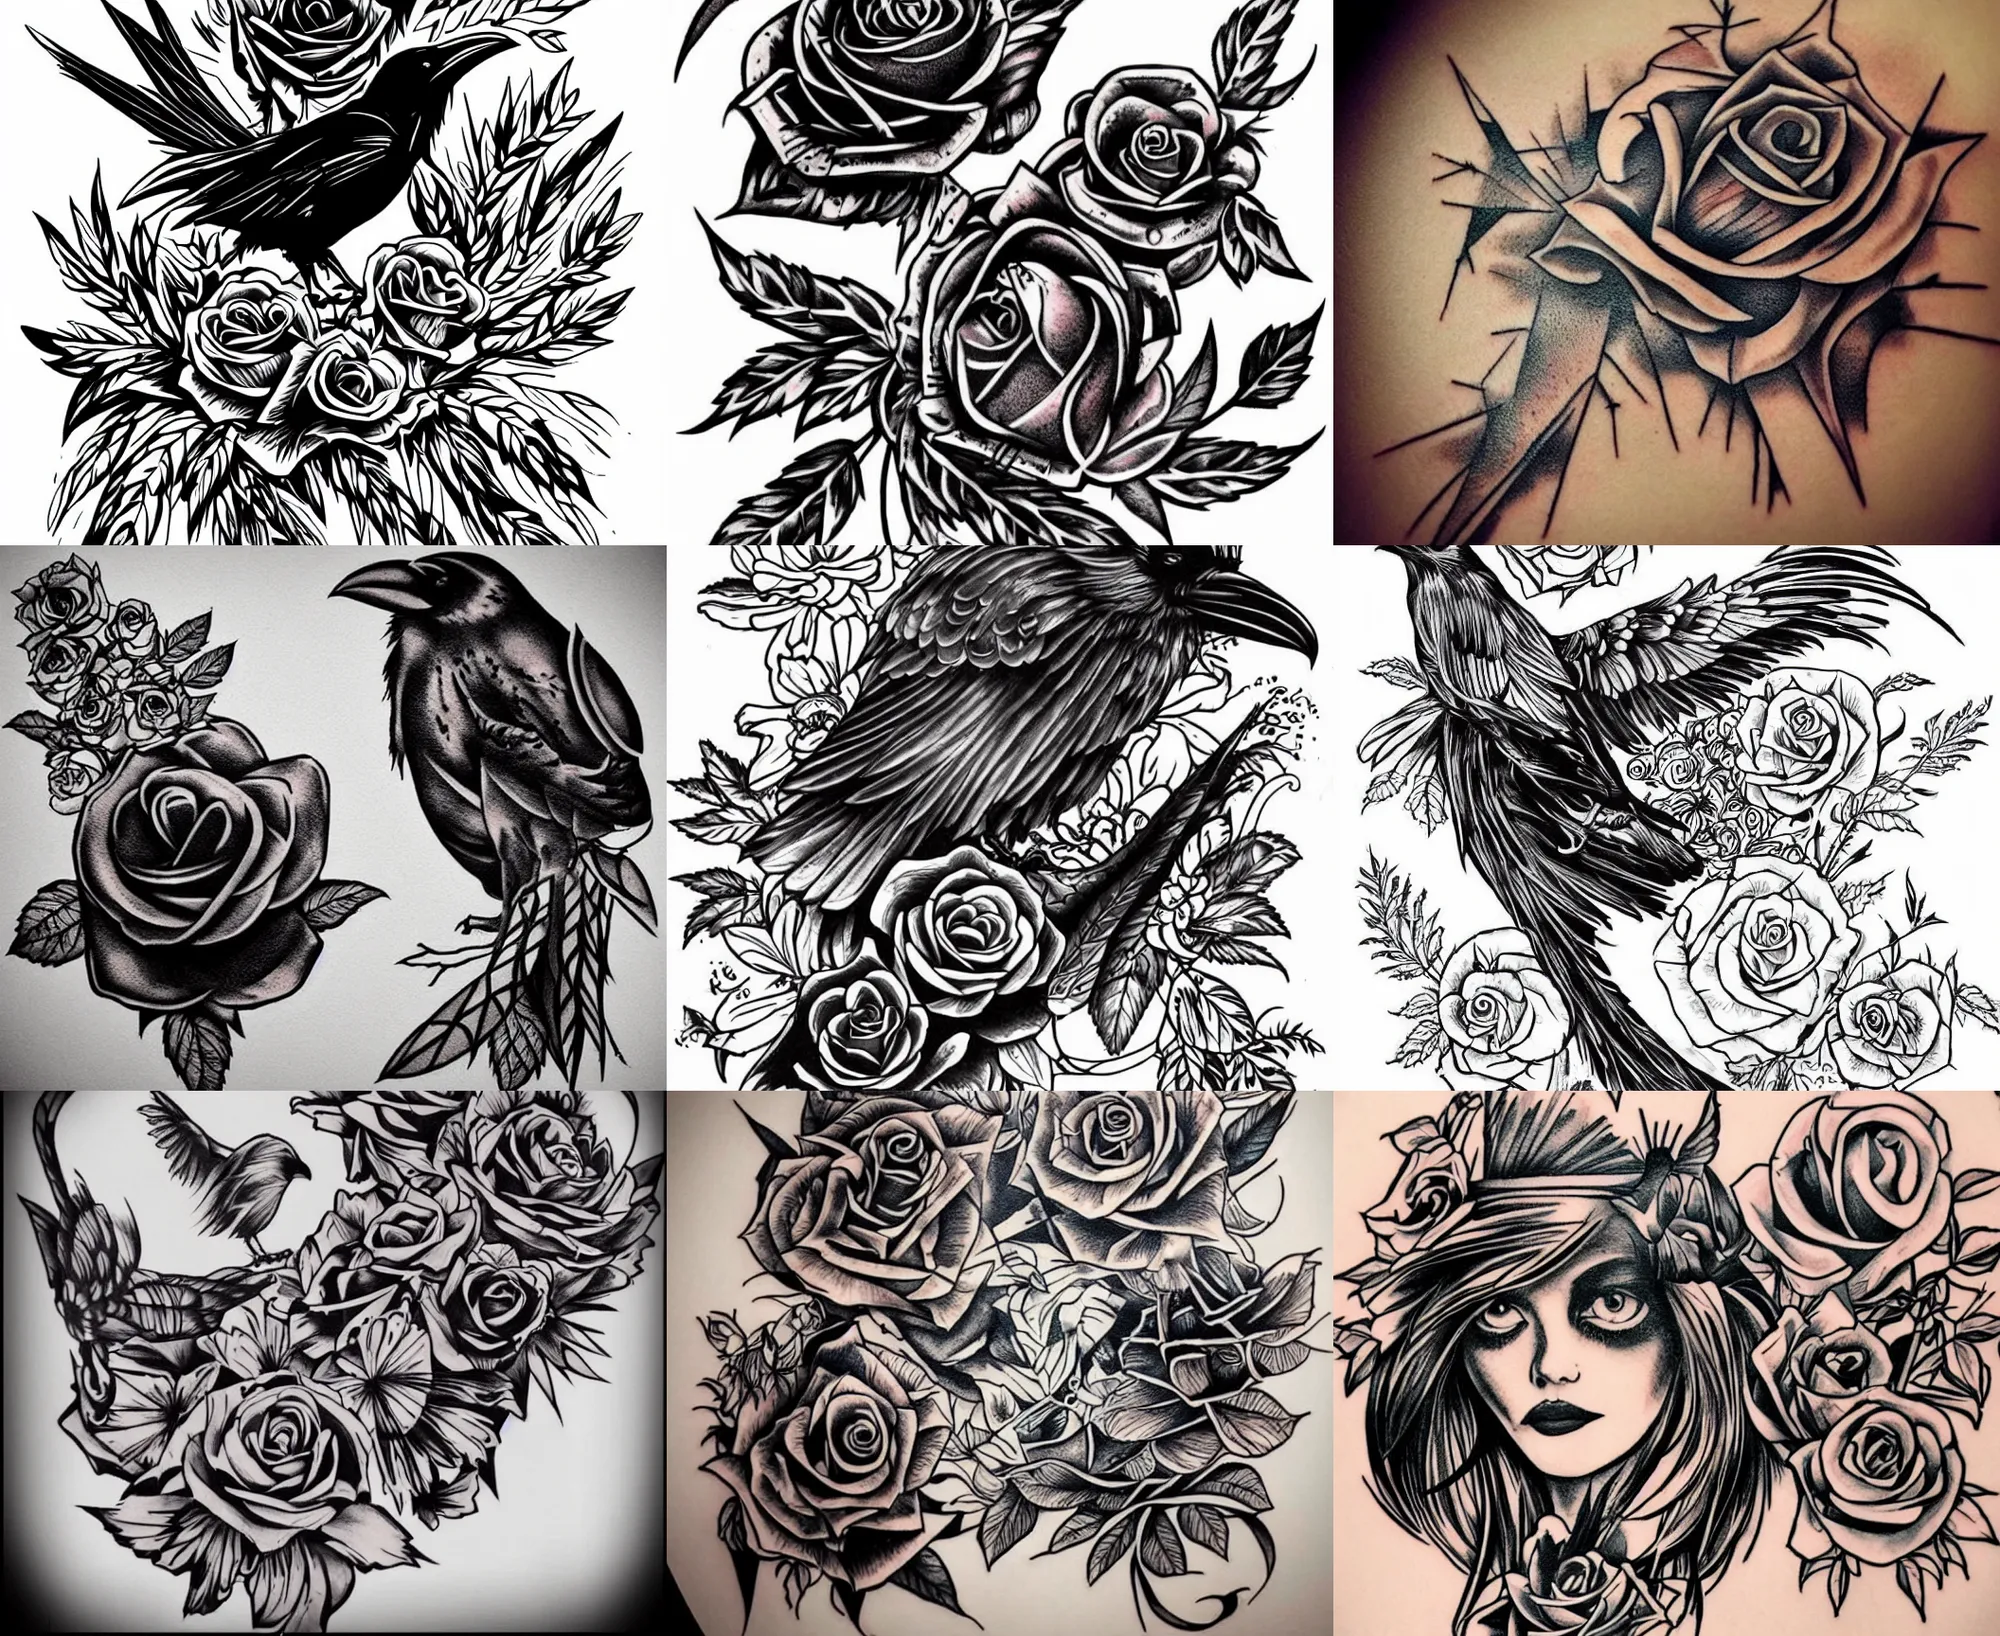 Raven and Roses Tattoo | Art Tattoo